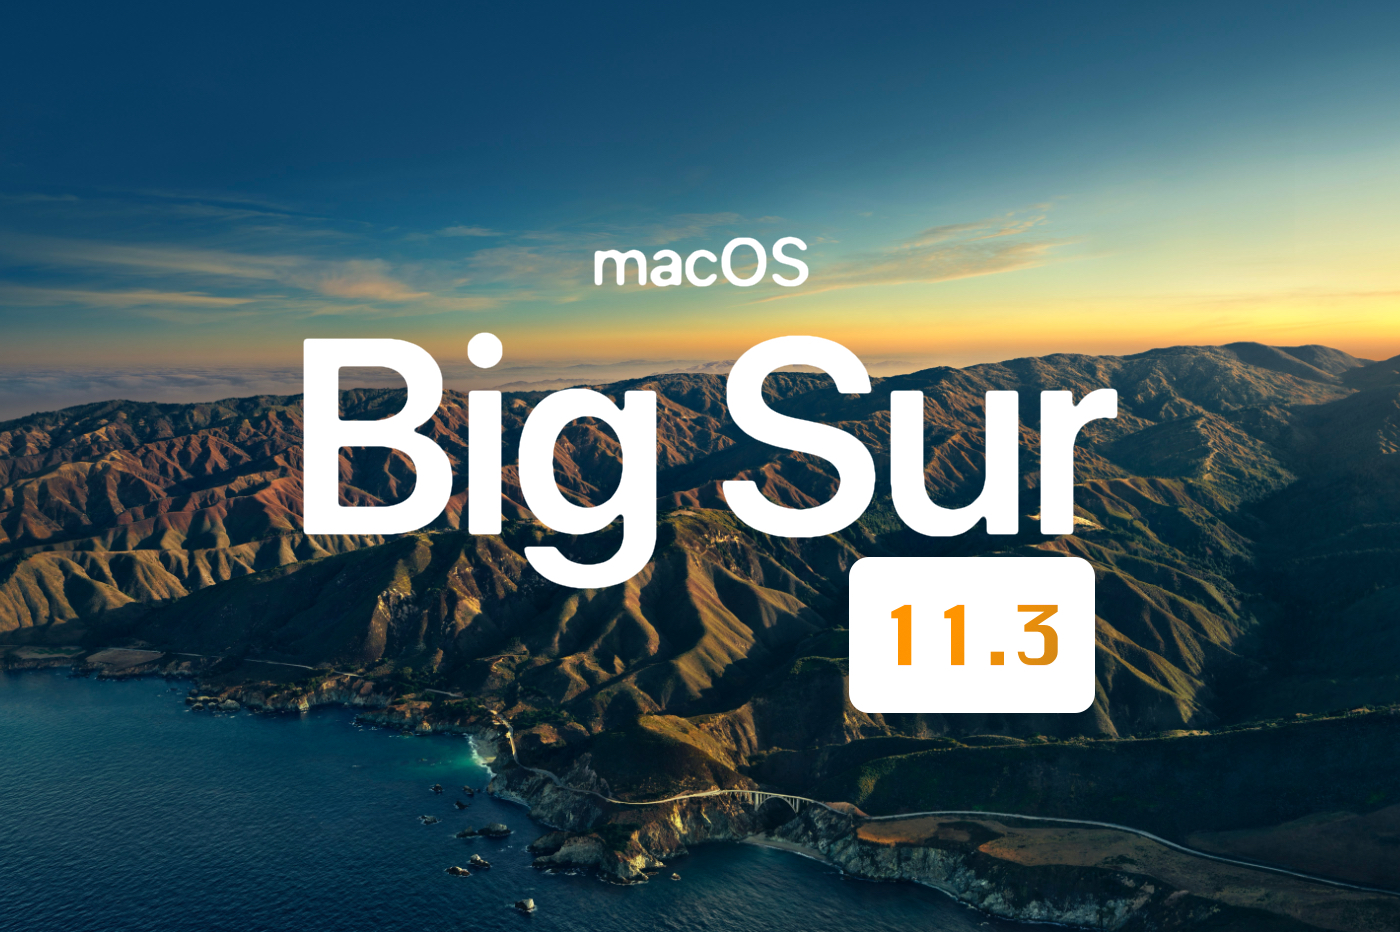 macOS 11.3